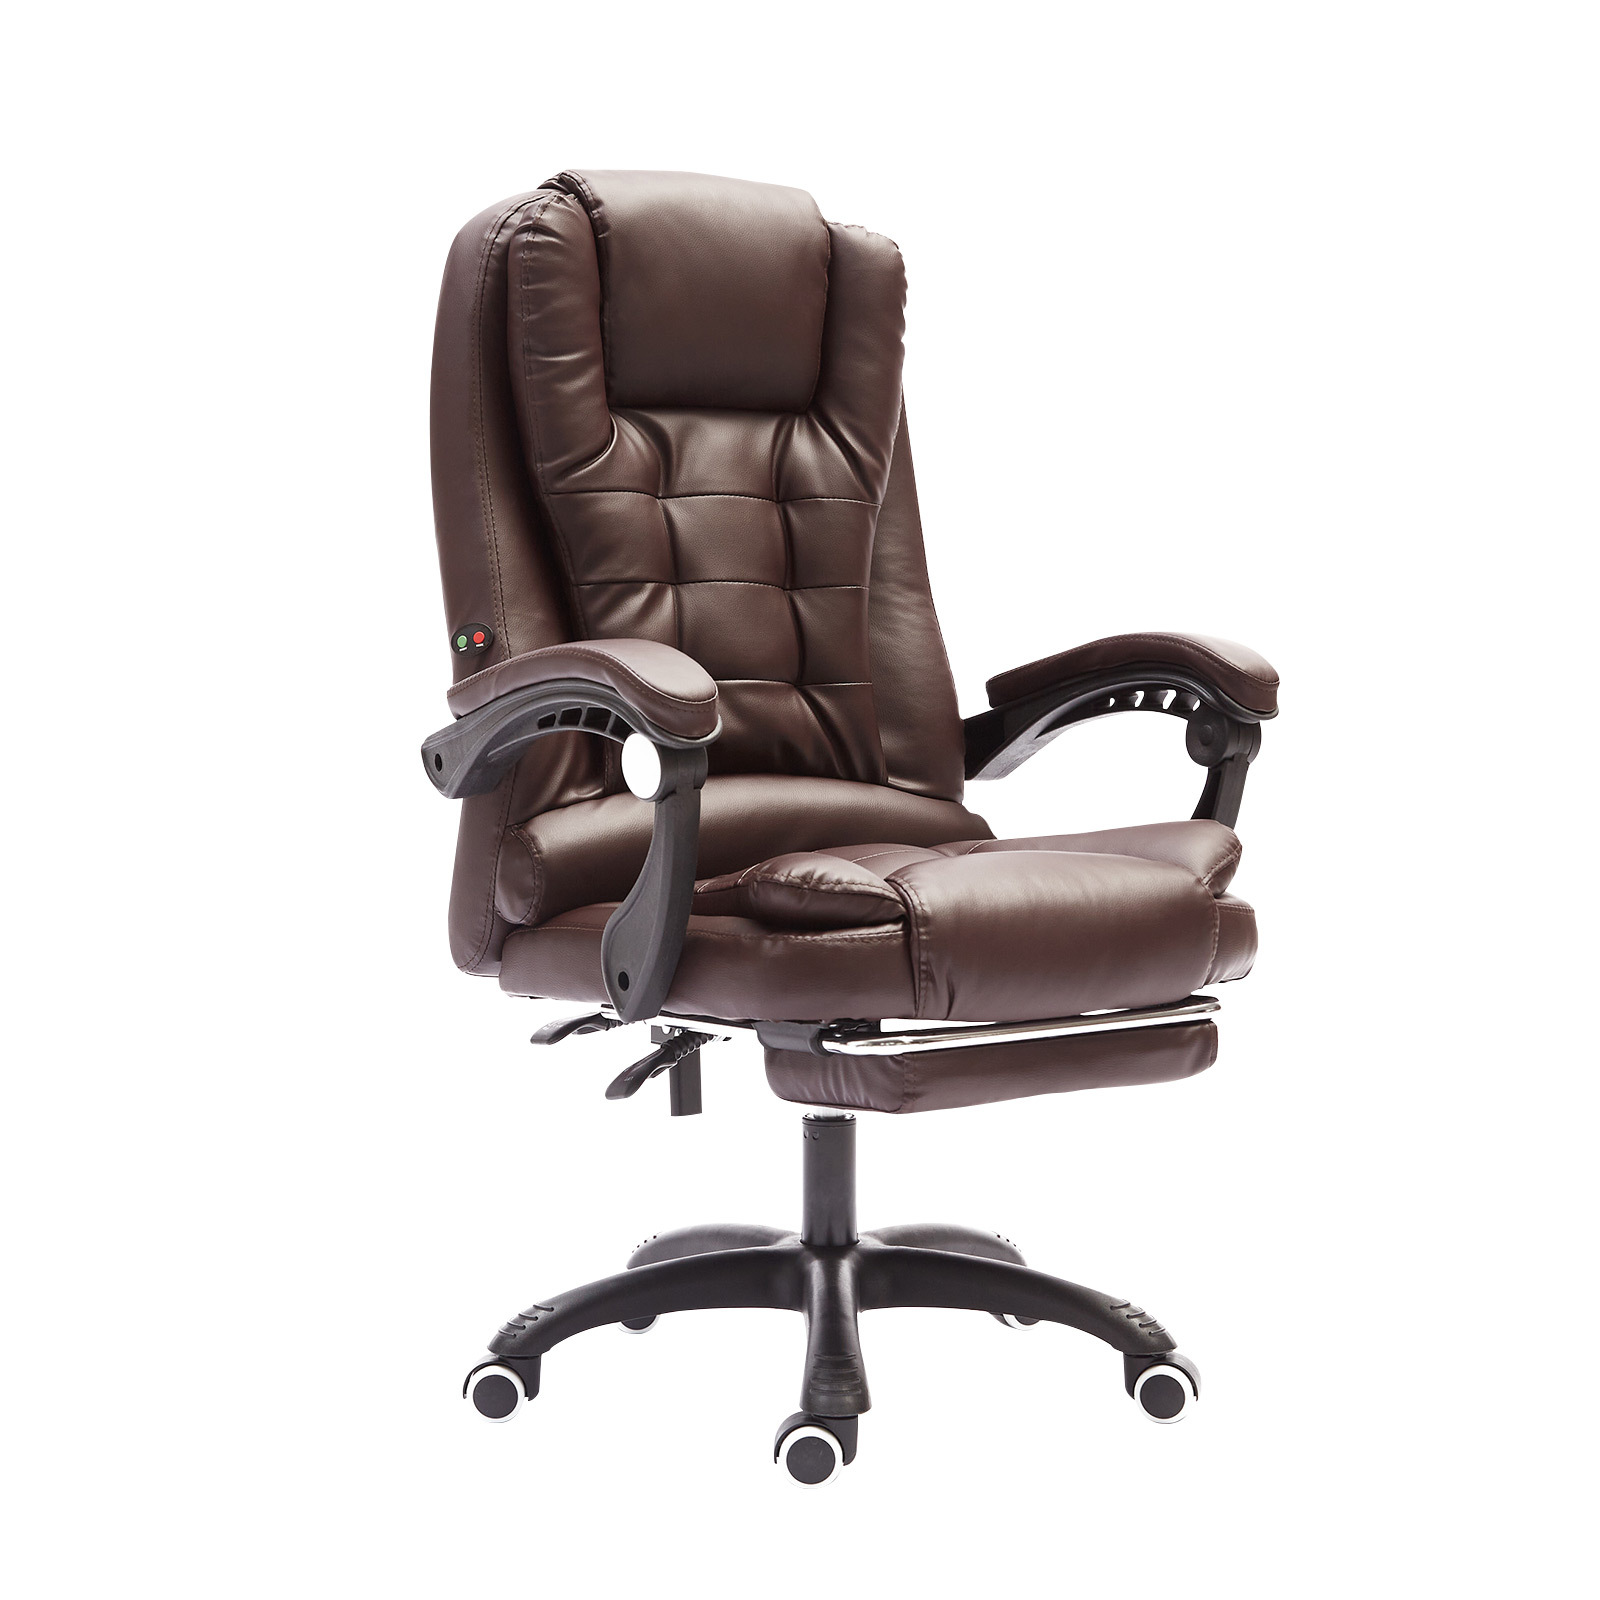 Massage Office Chair 2 Points Footrest - ESPRESSO